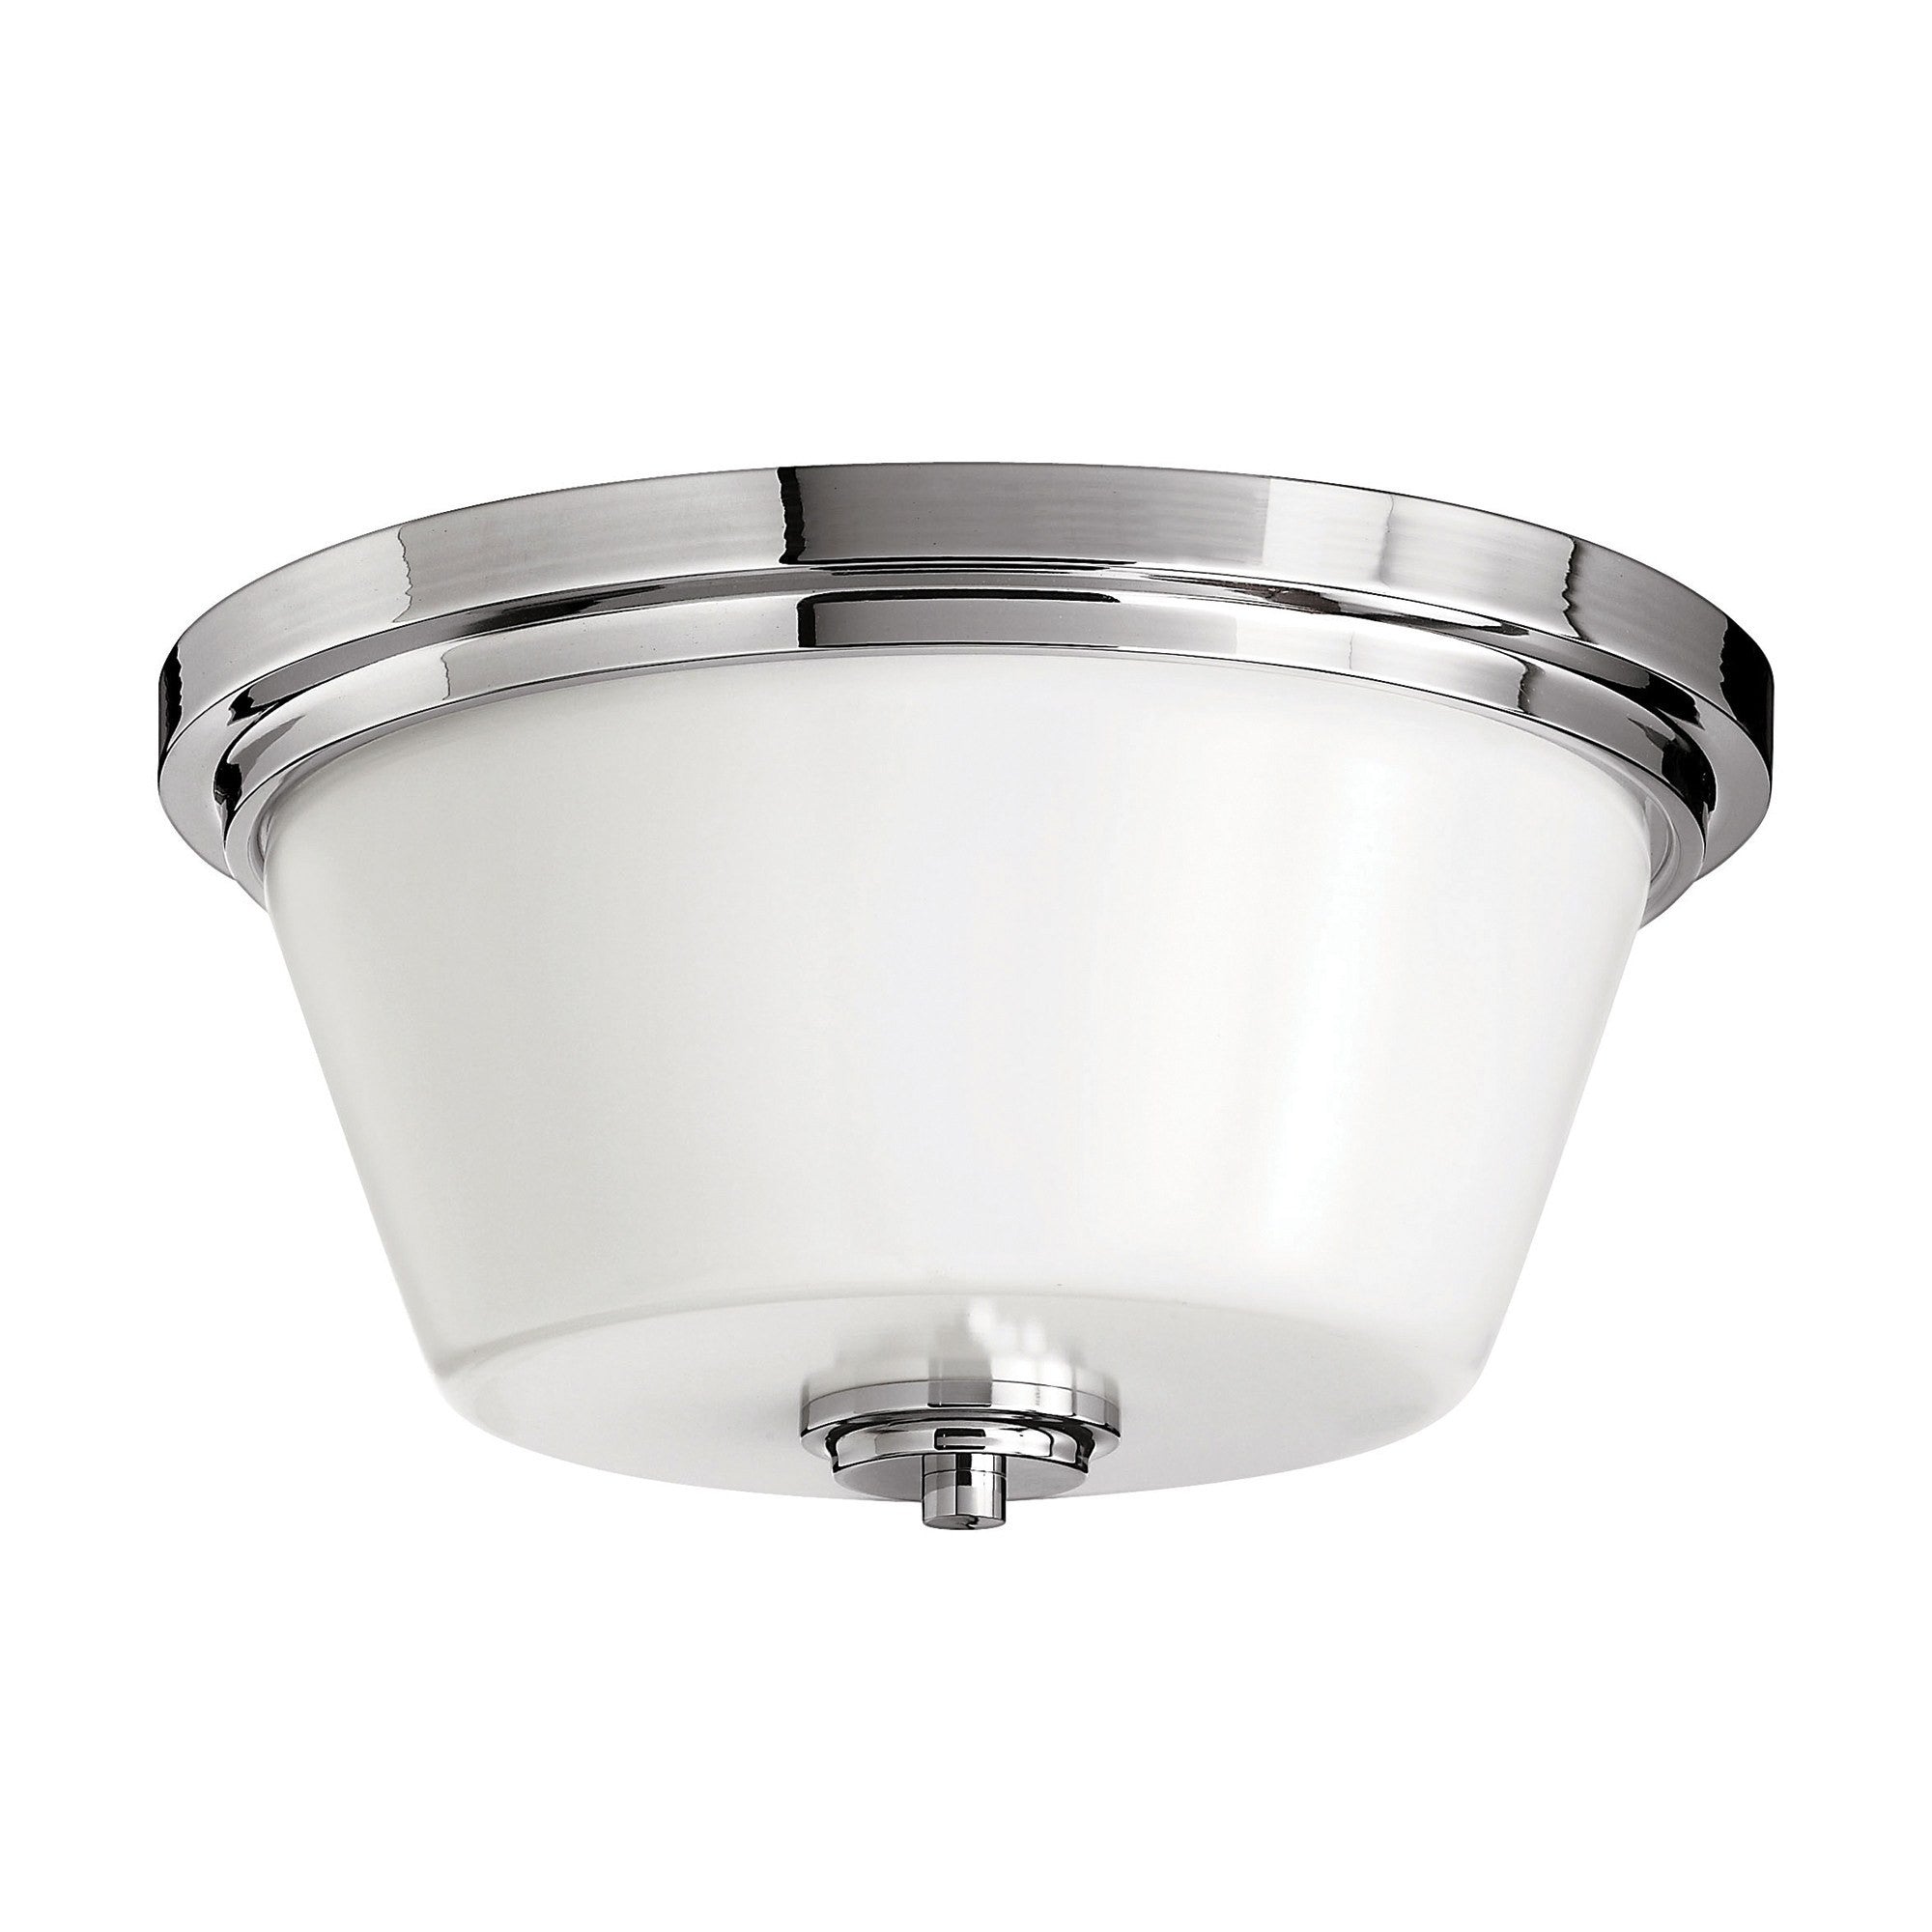 Dalston Chrome Flush Mount Bathroom Ceiling Light Id 7301